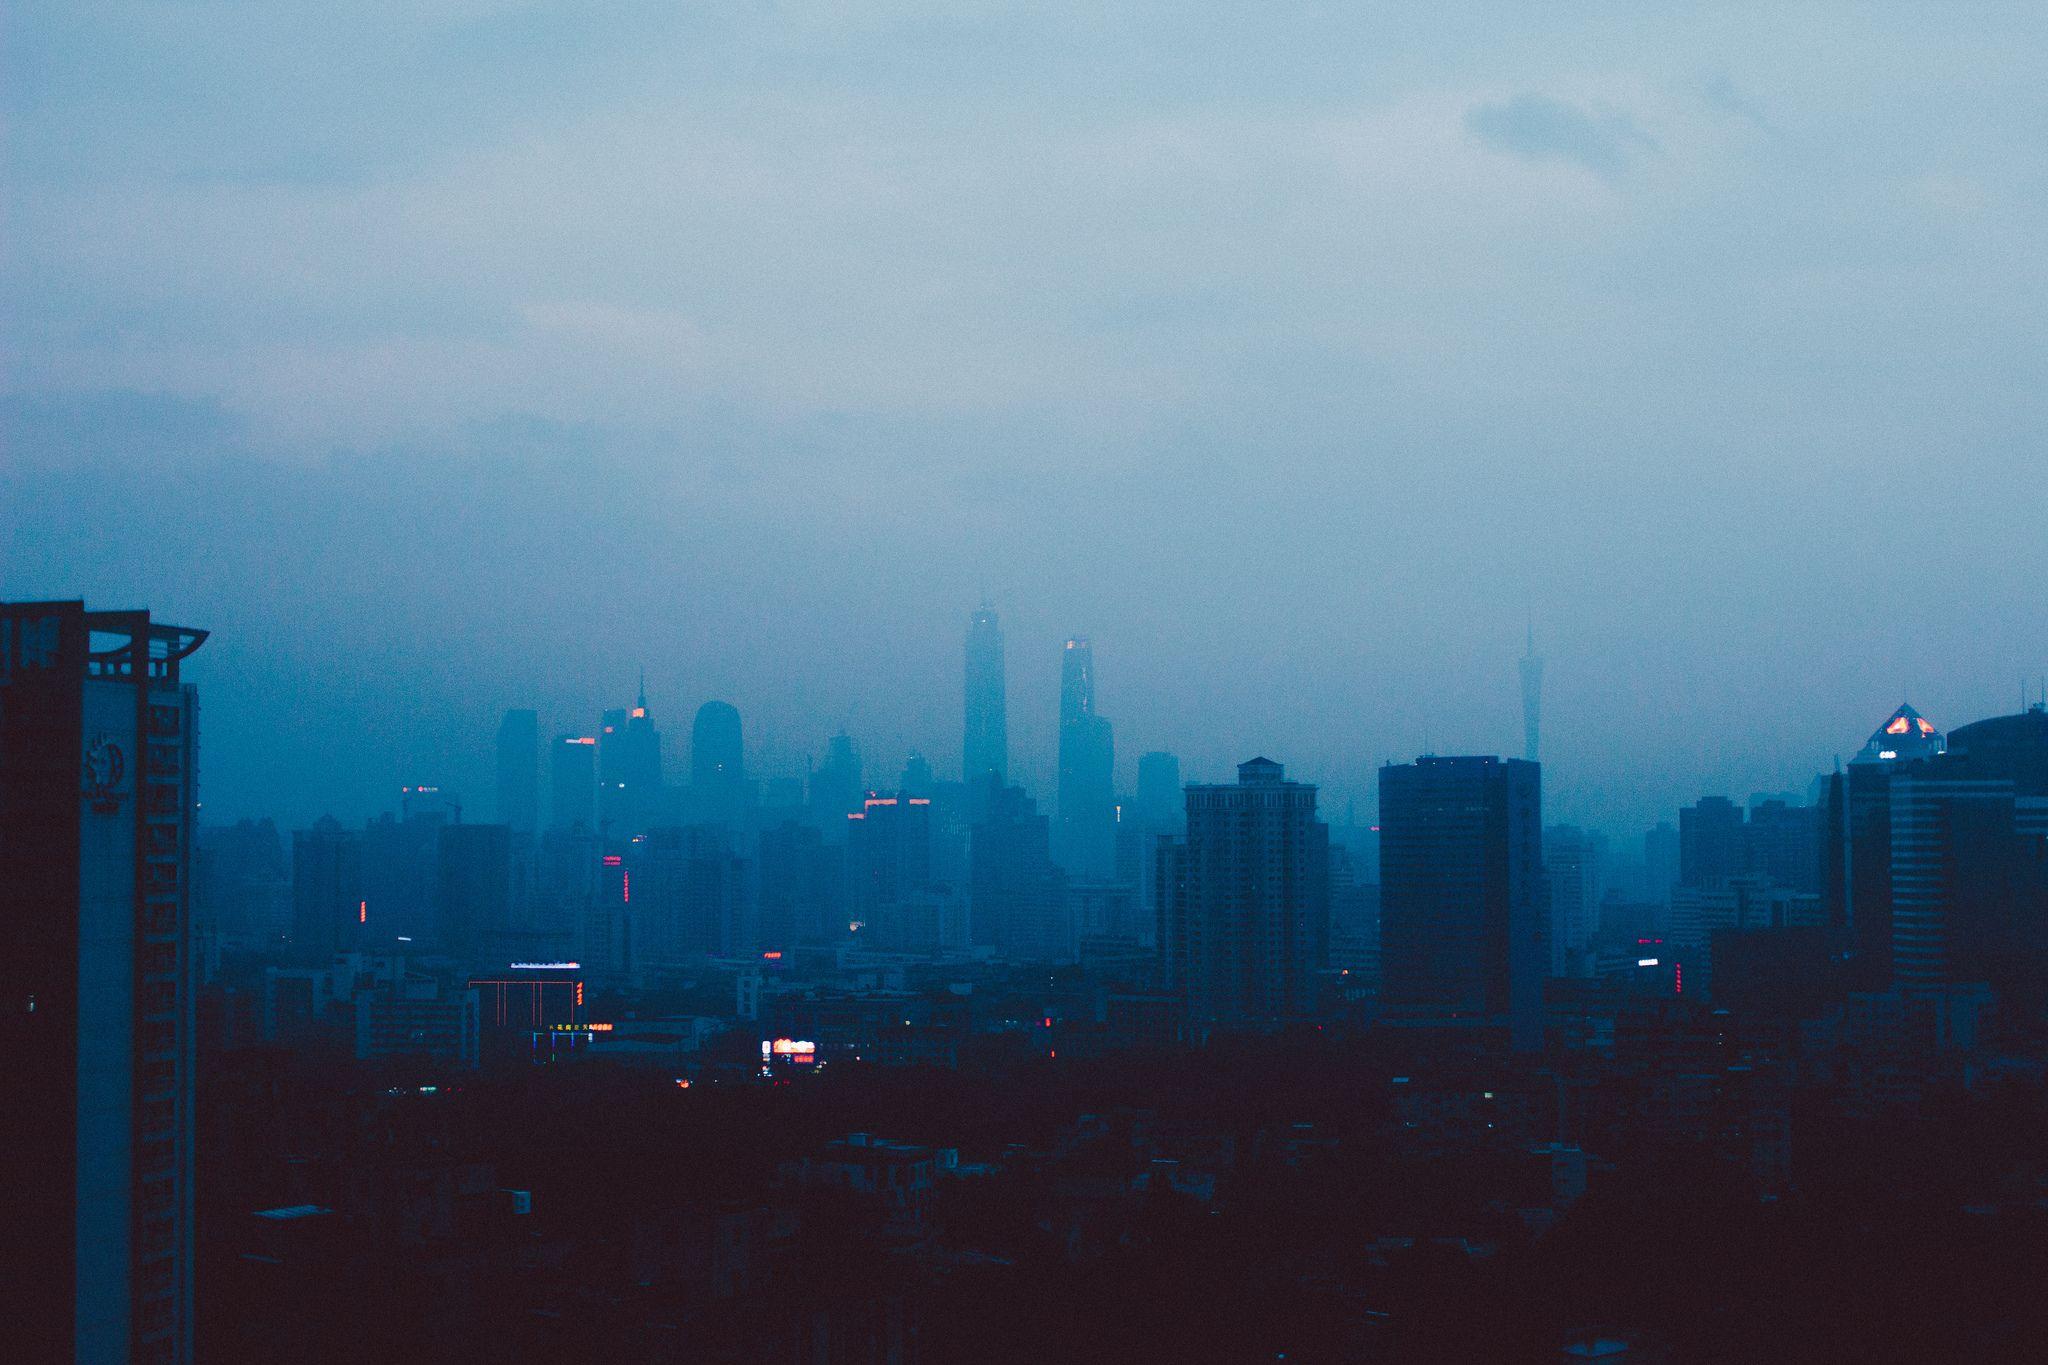 A hazy city skyline at dusk with a blue hue. - Lo fi